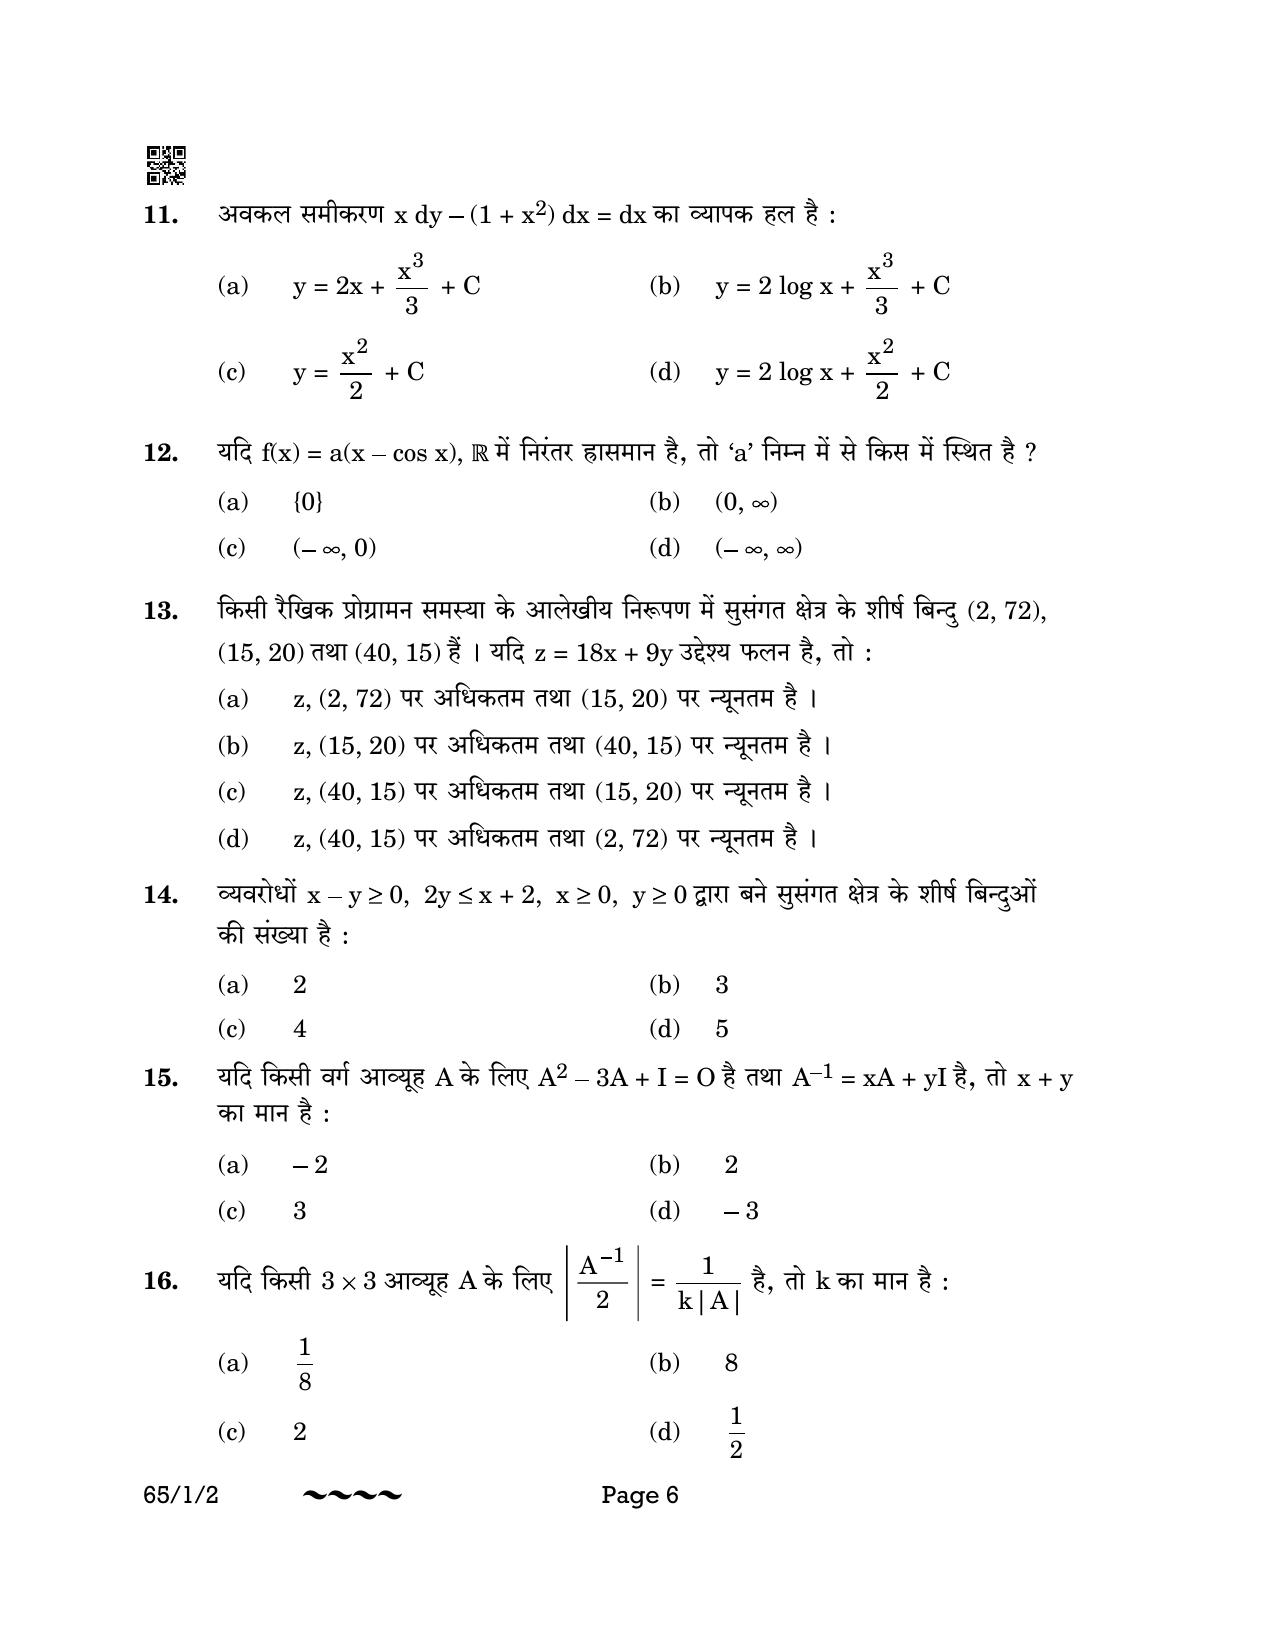 CBSE Class 12 65-1-2 MATHEMATICS 2023 Question Paper - Page 6